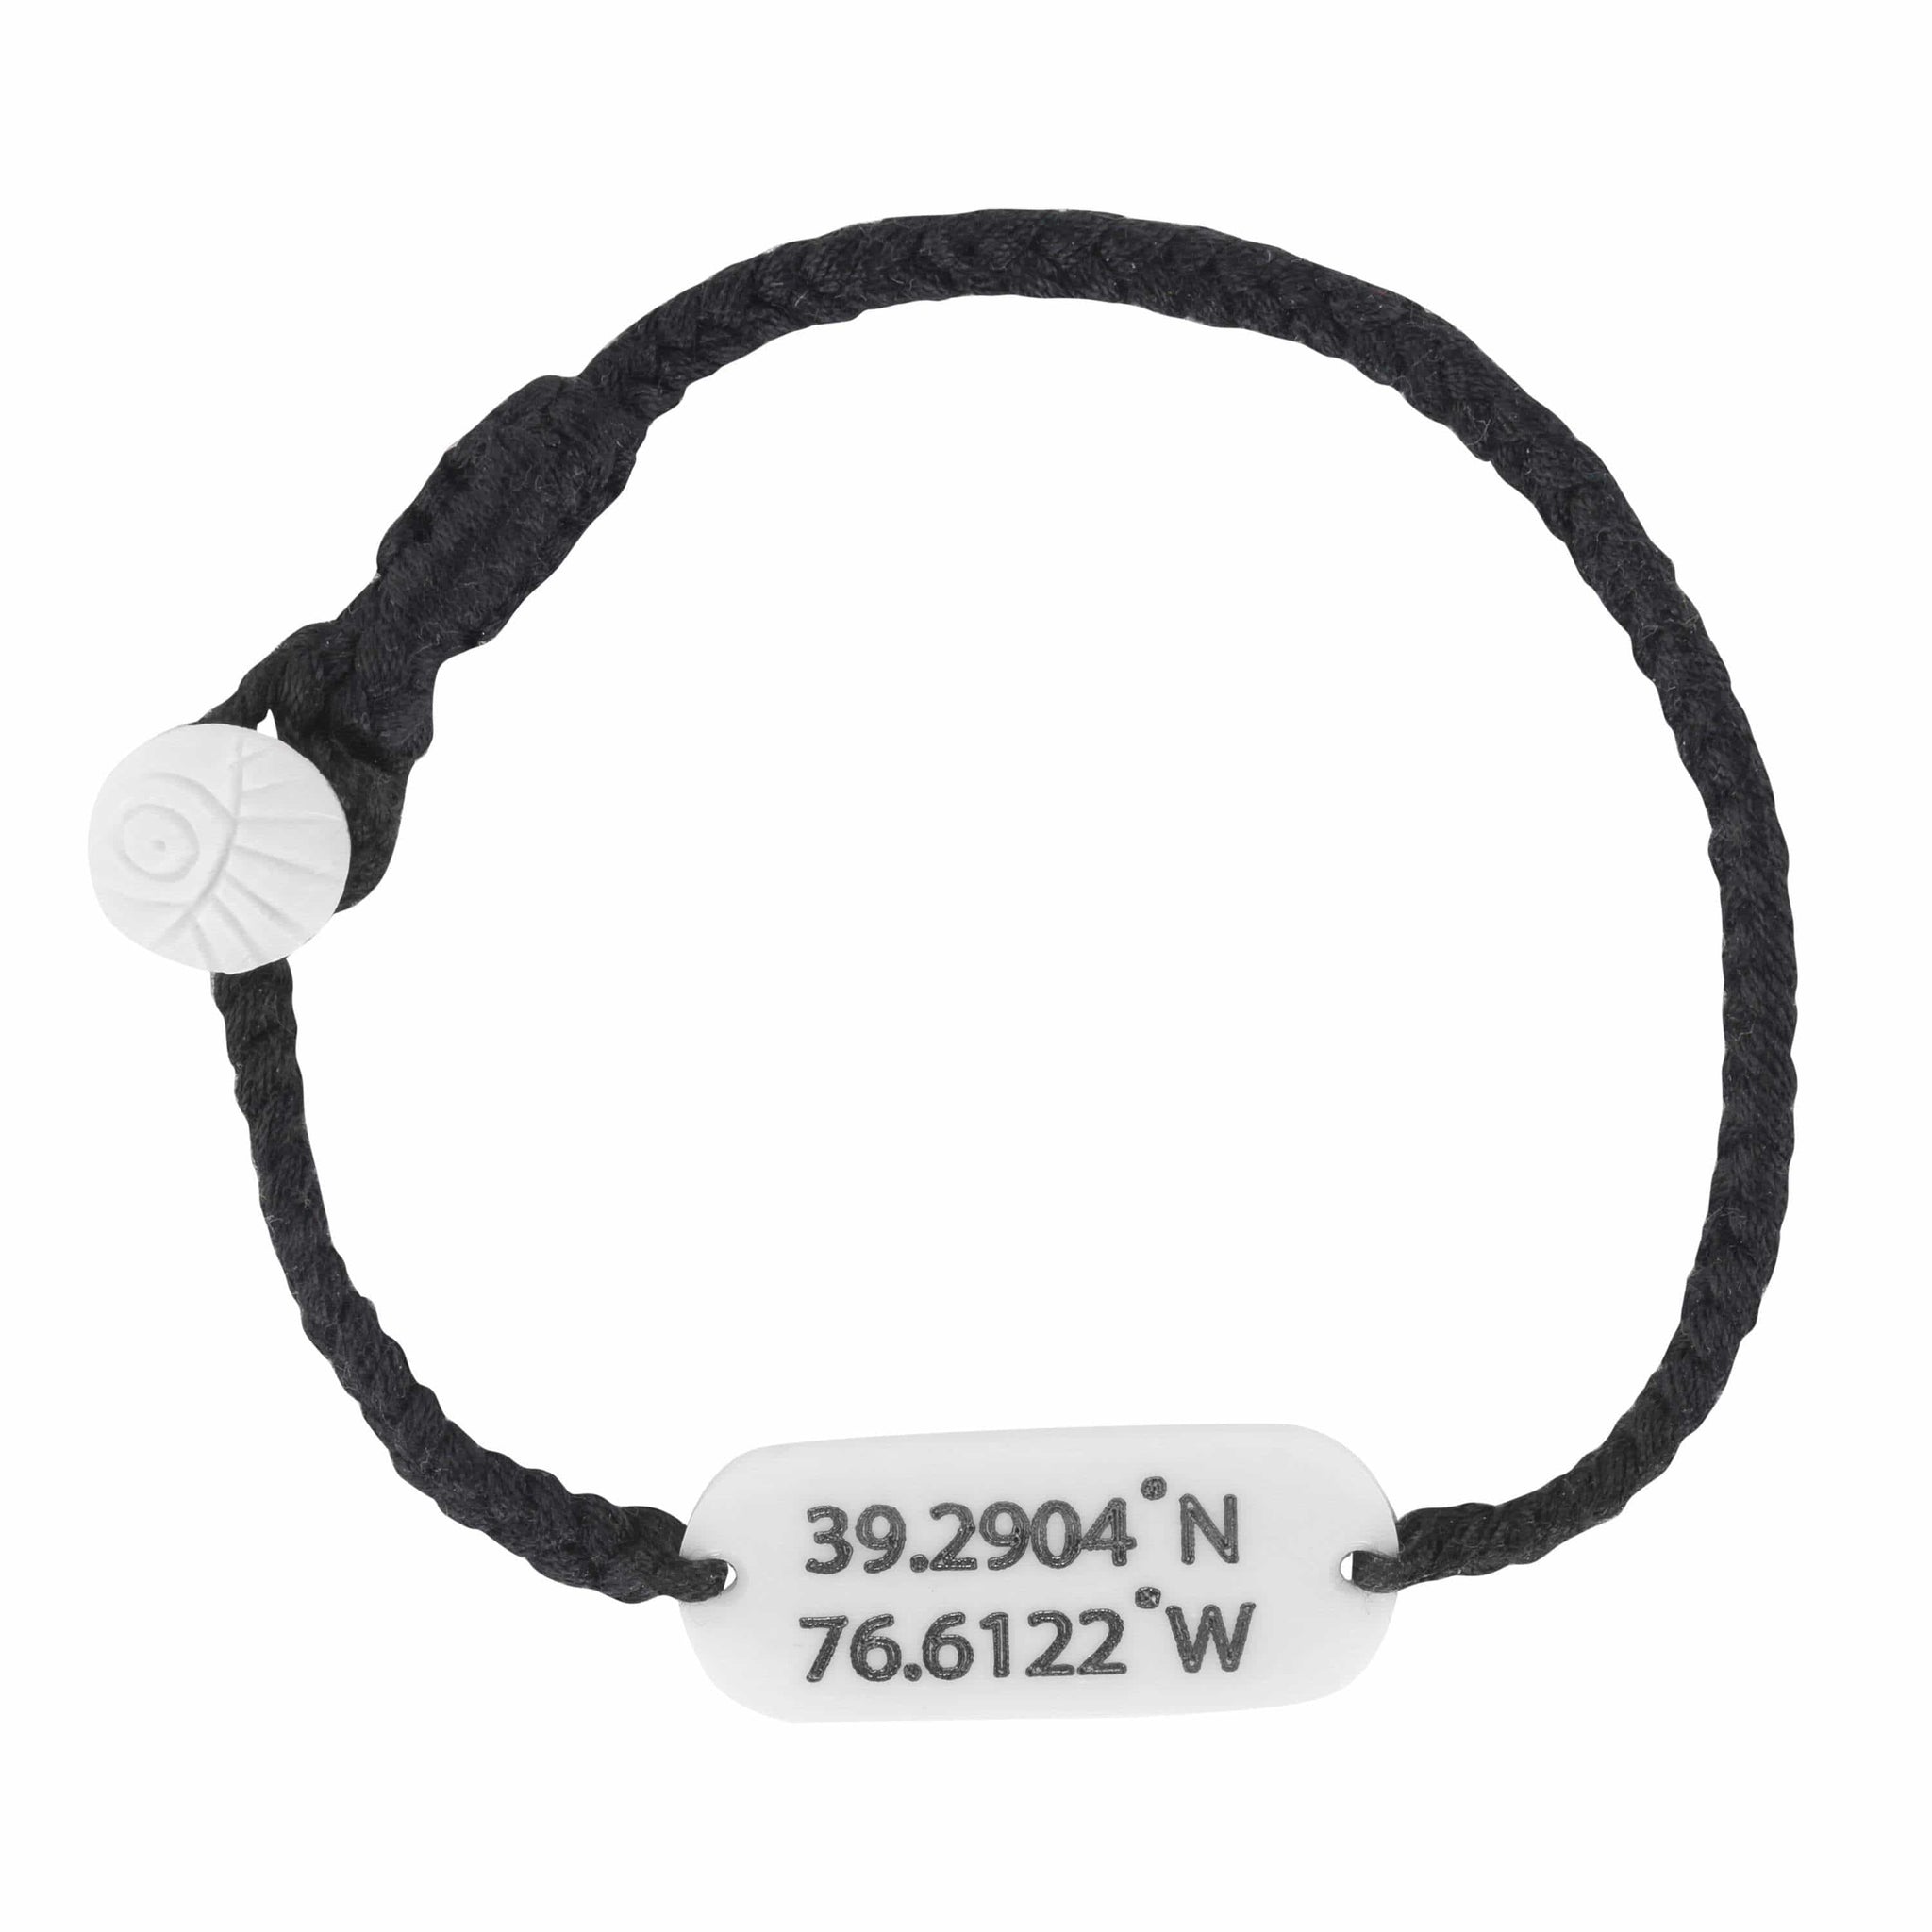 Coordinate Bracelet, Gift for him, Gift for best friends, Travel lovers  gift | eBay